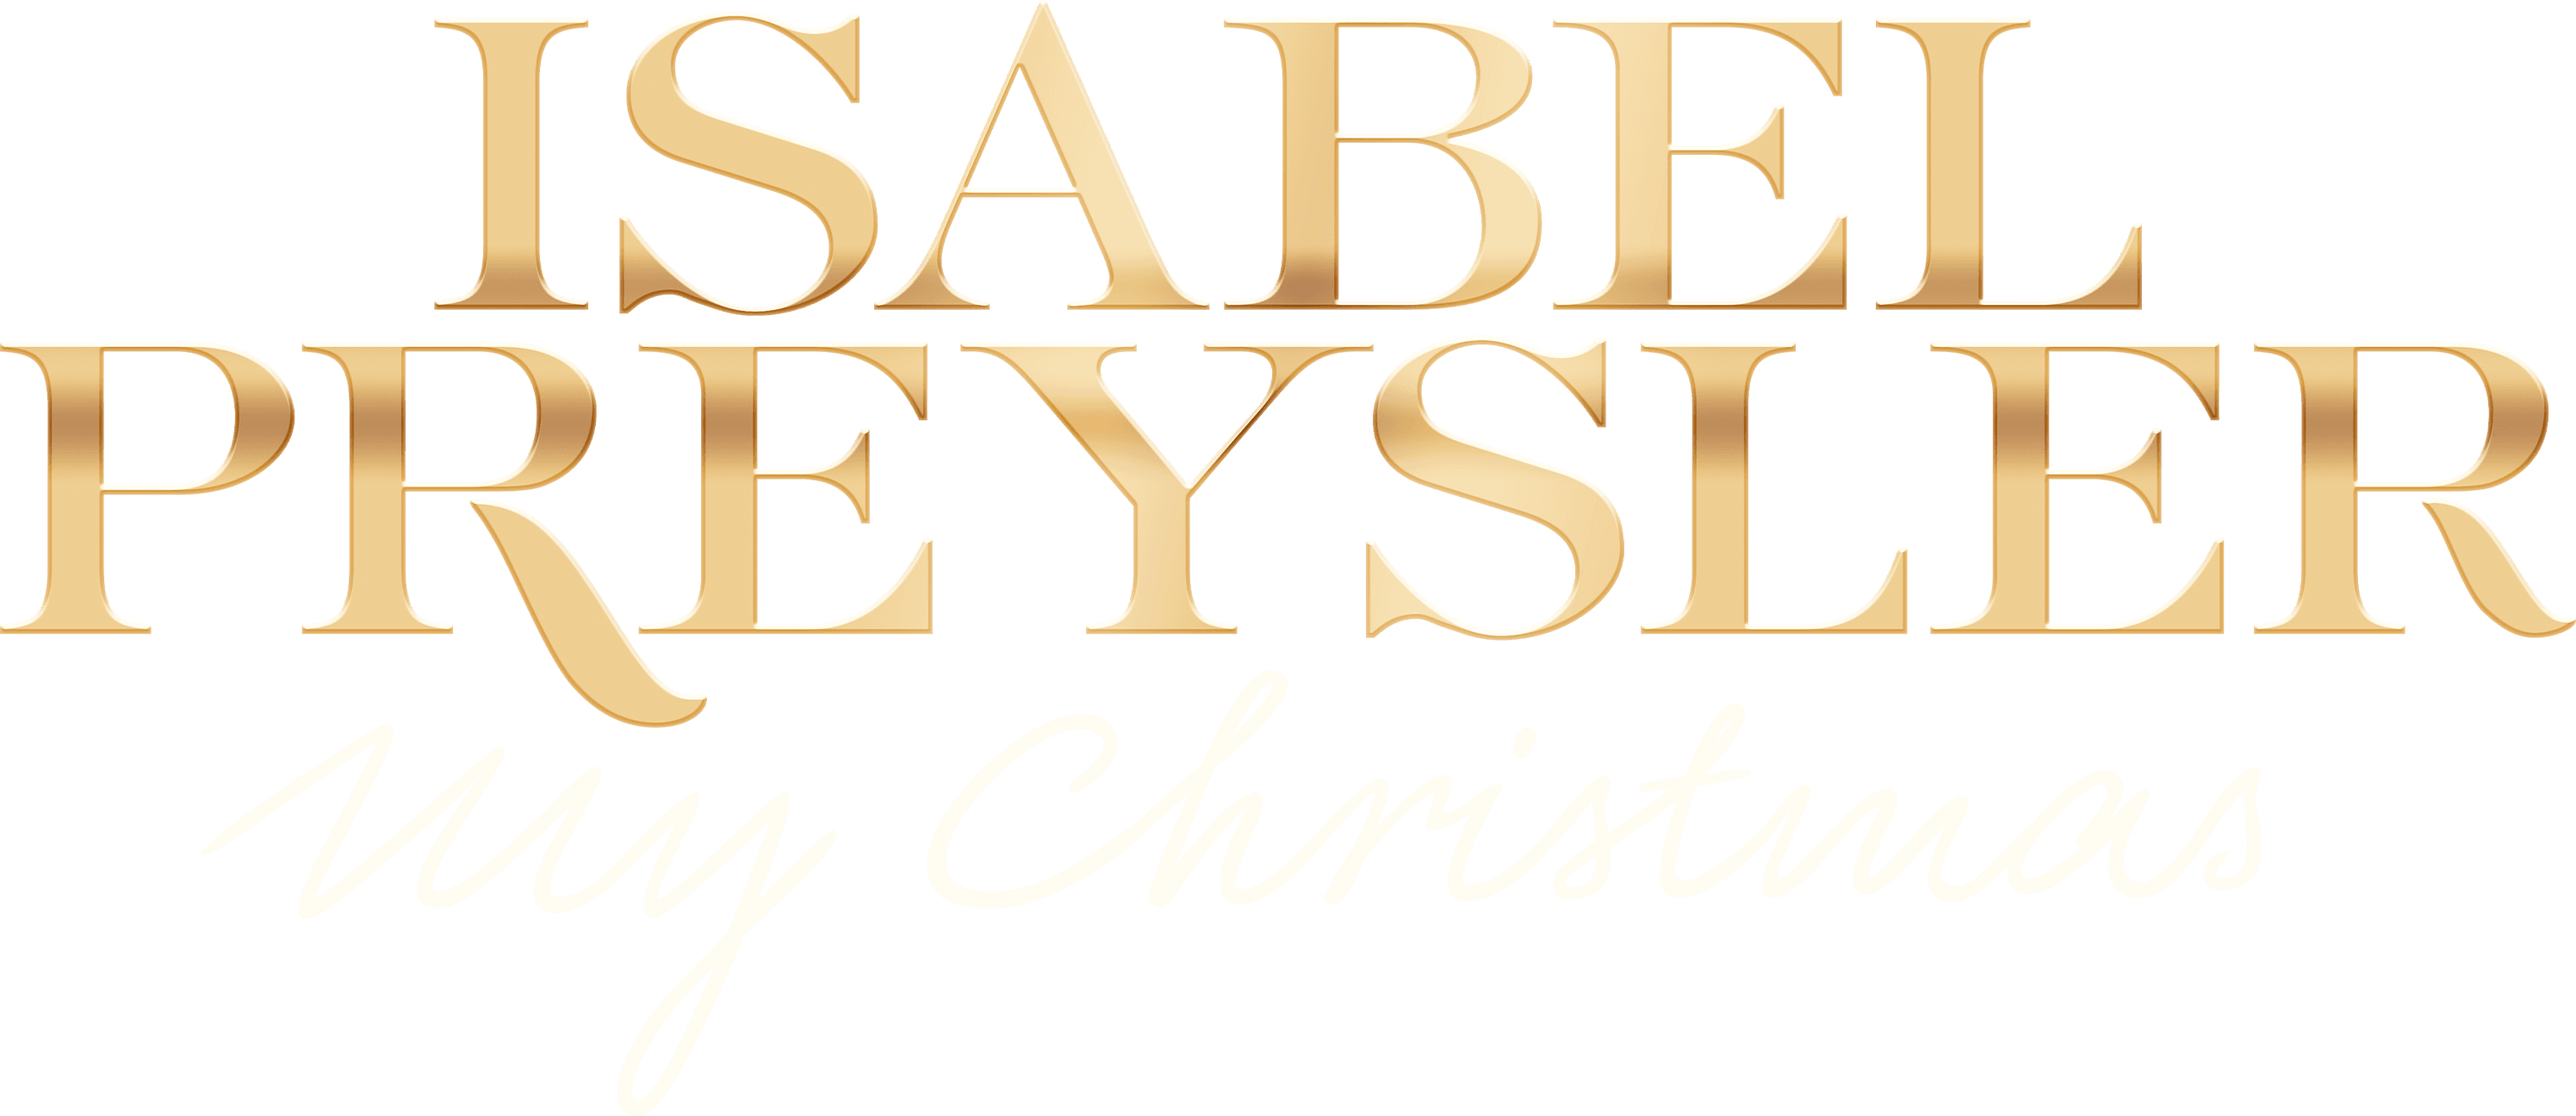 Isabel Preysler: My Christmas logo